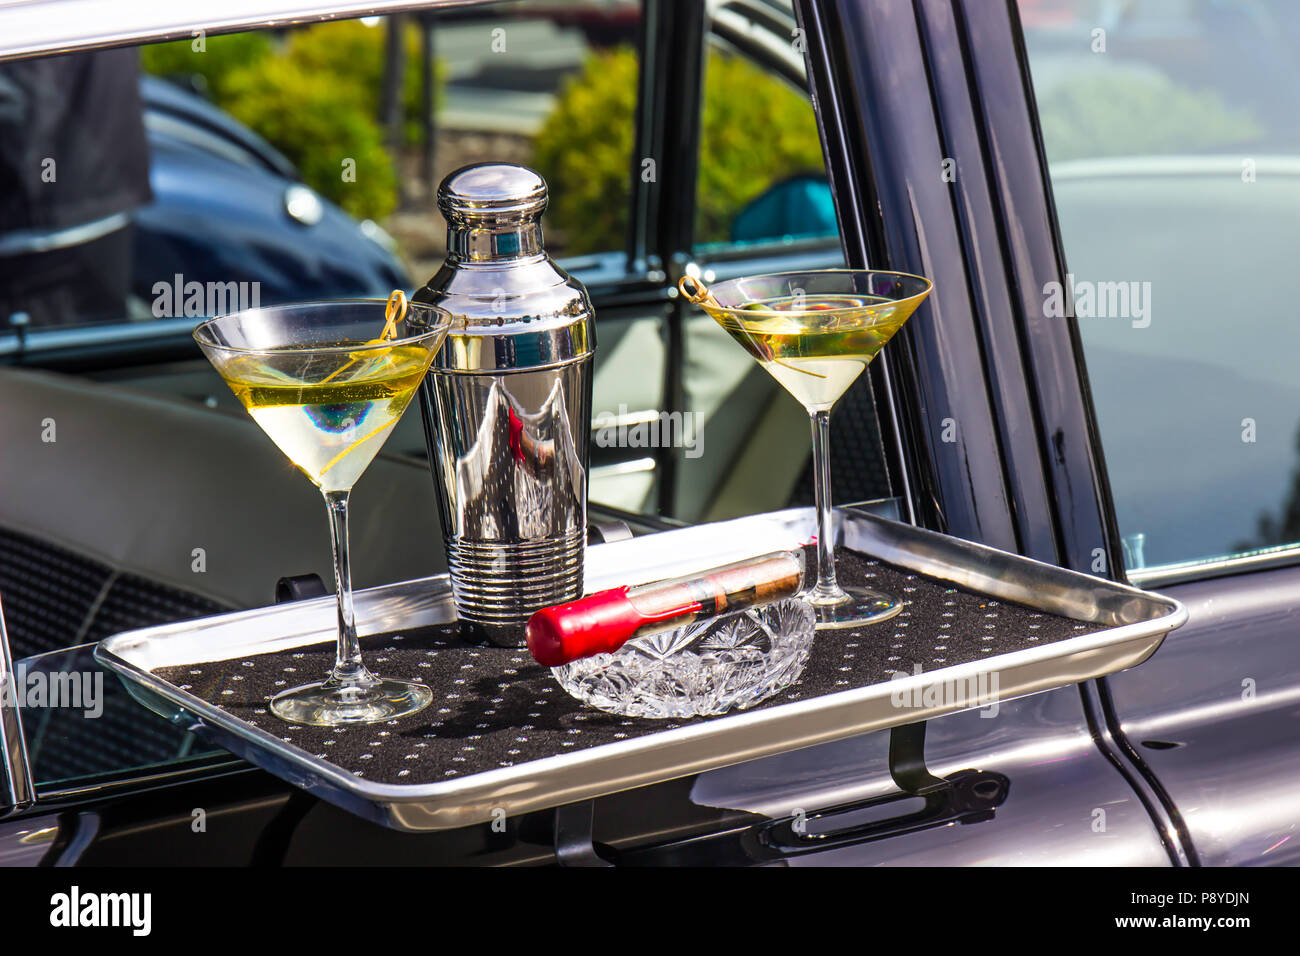 Martini Shaker, Glasses & Cigar On Car Hop Serving Tray Stock Photo